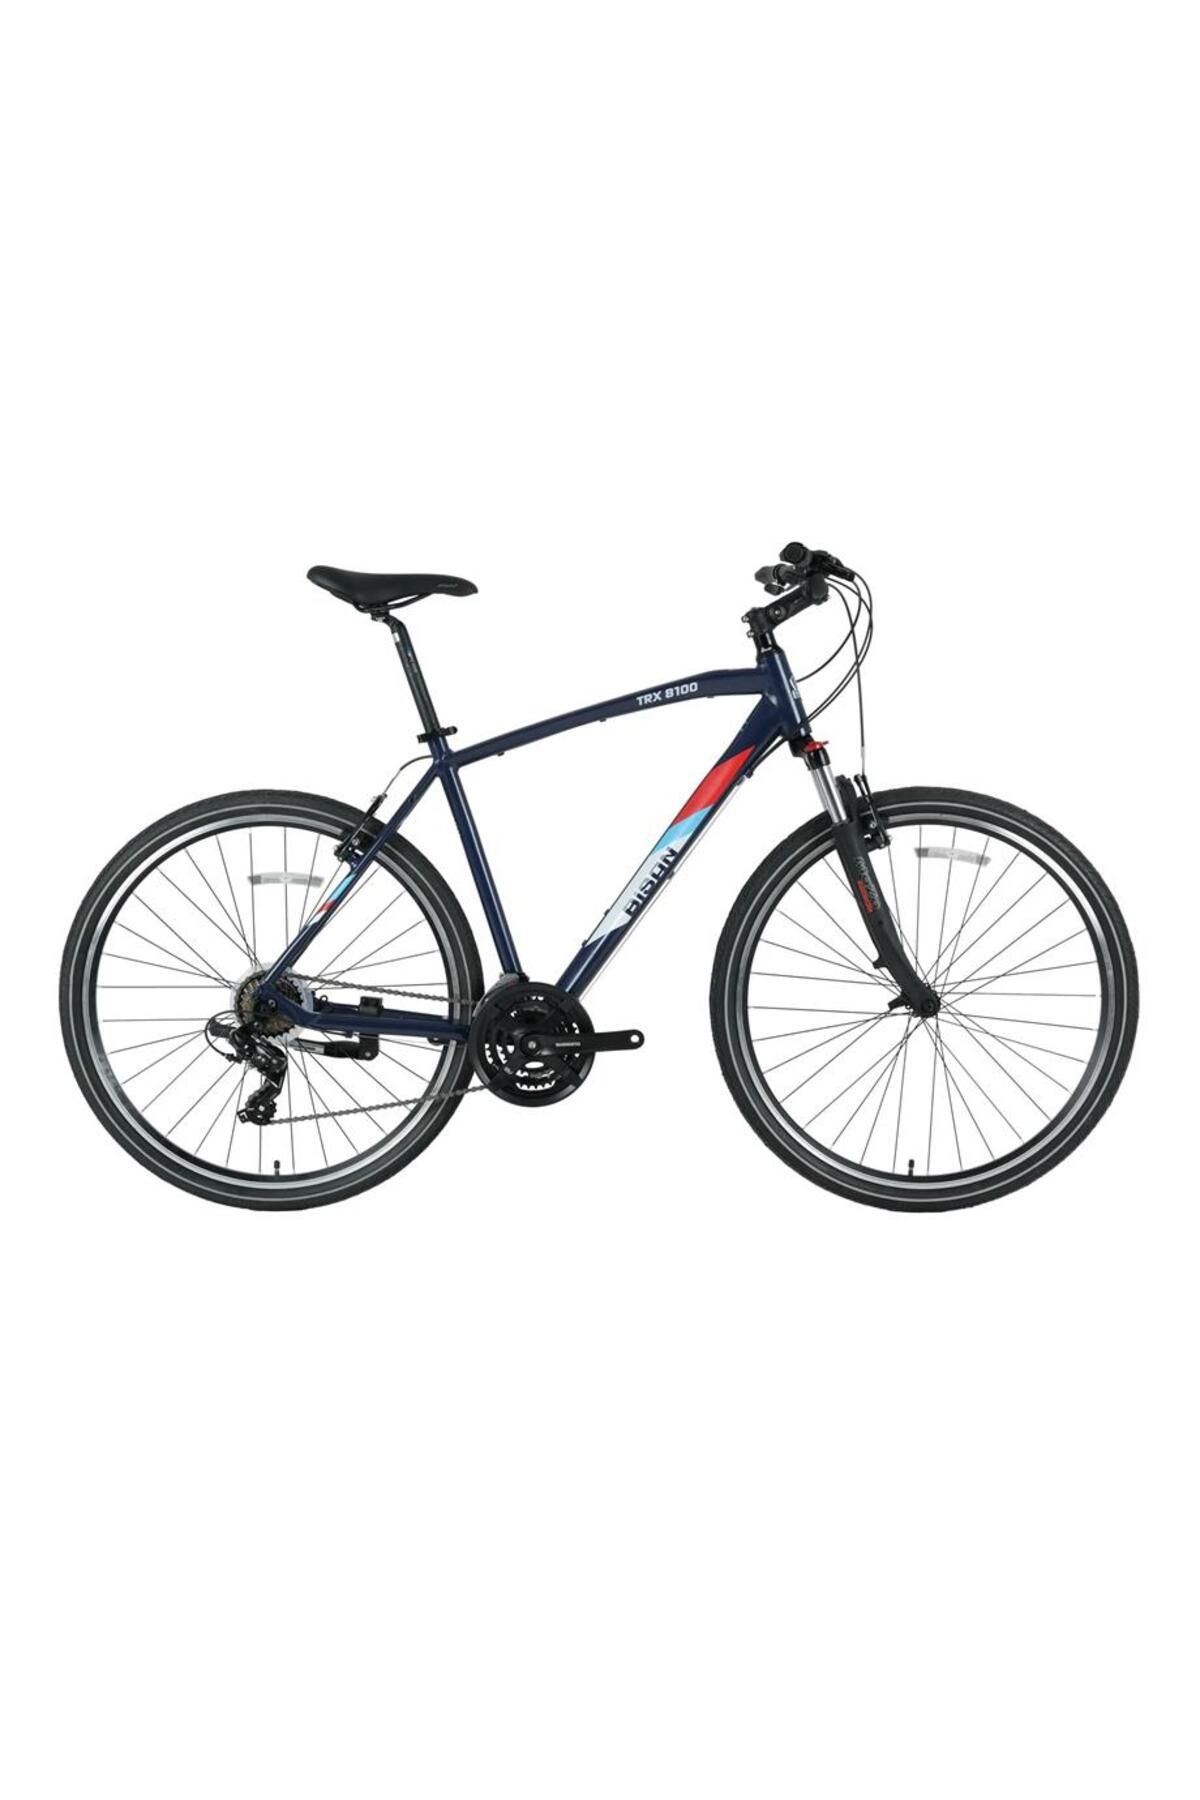 Bisan Trx 8100 Erkek Şehir Bisikleti 56cm V 28 Jant 21 Vites Lacivert Kırmızı Mavi